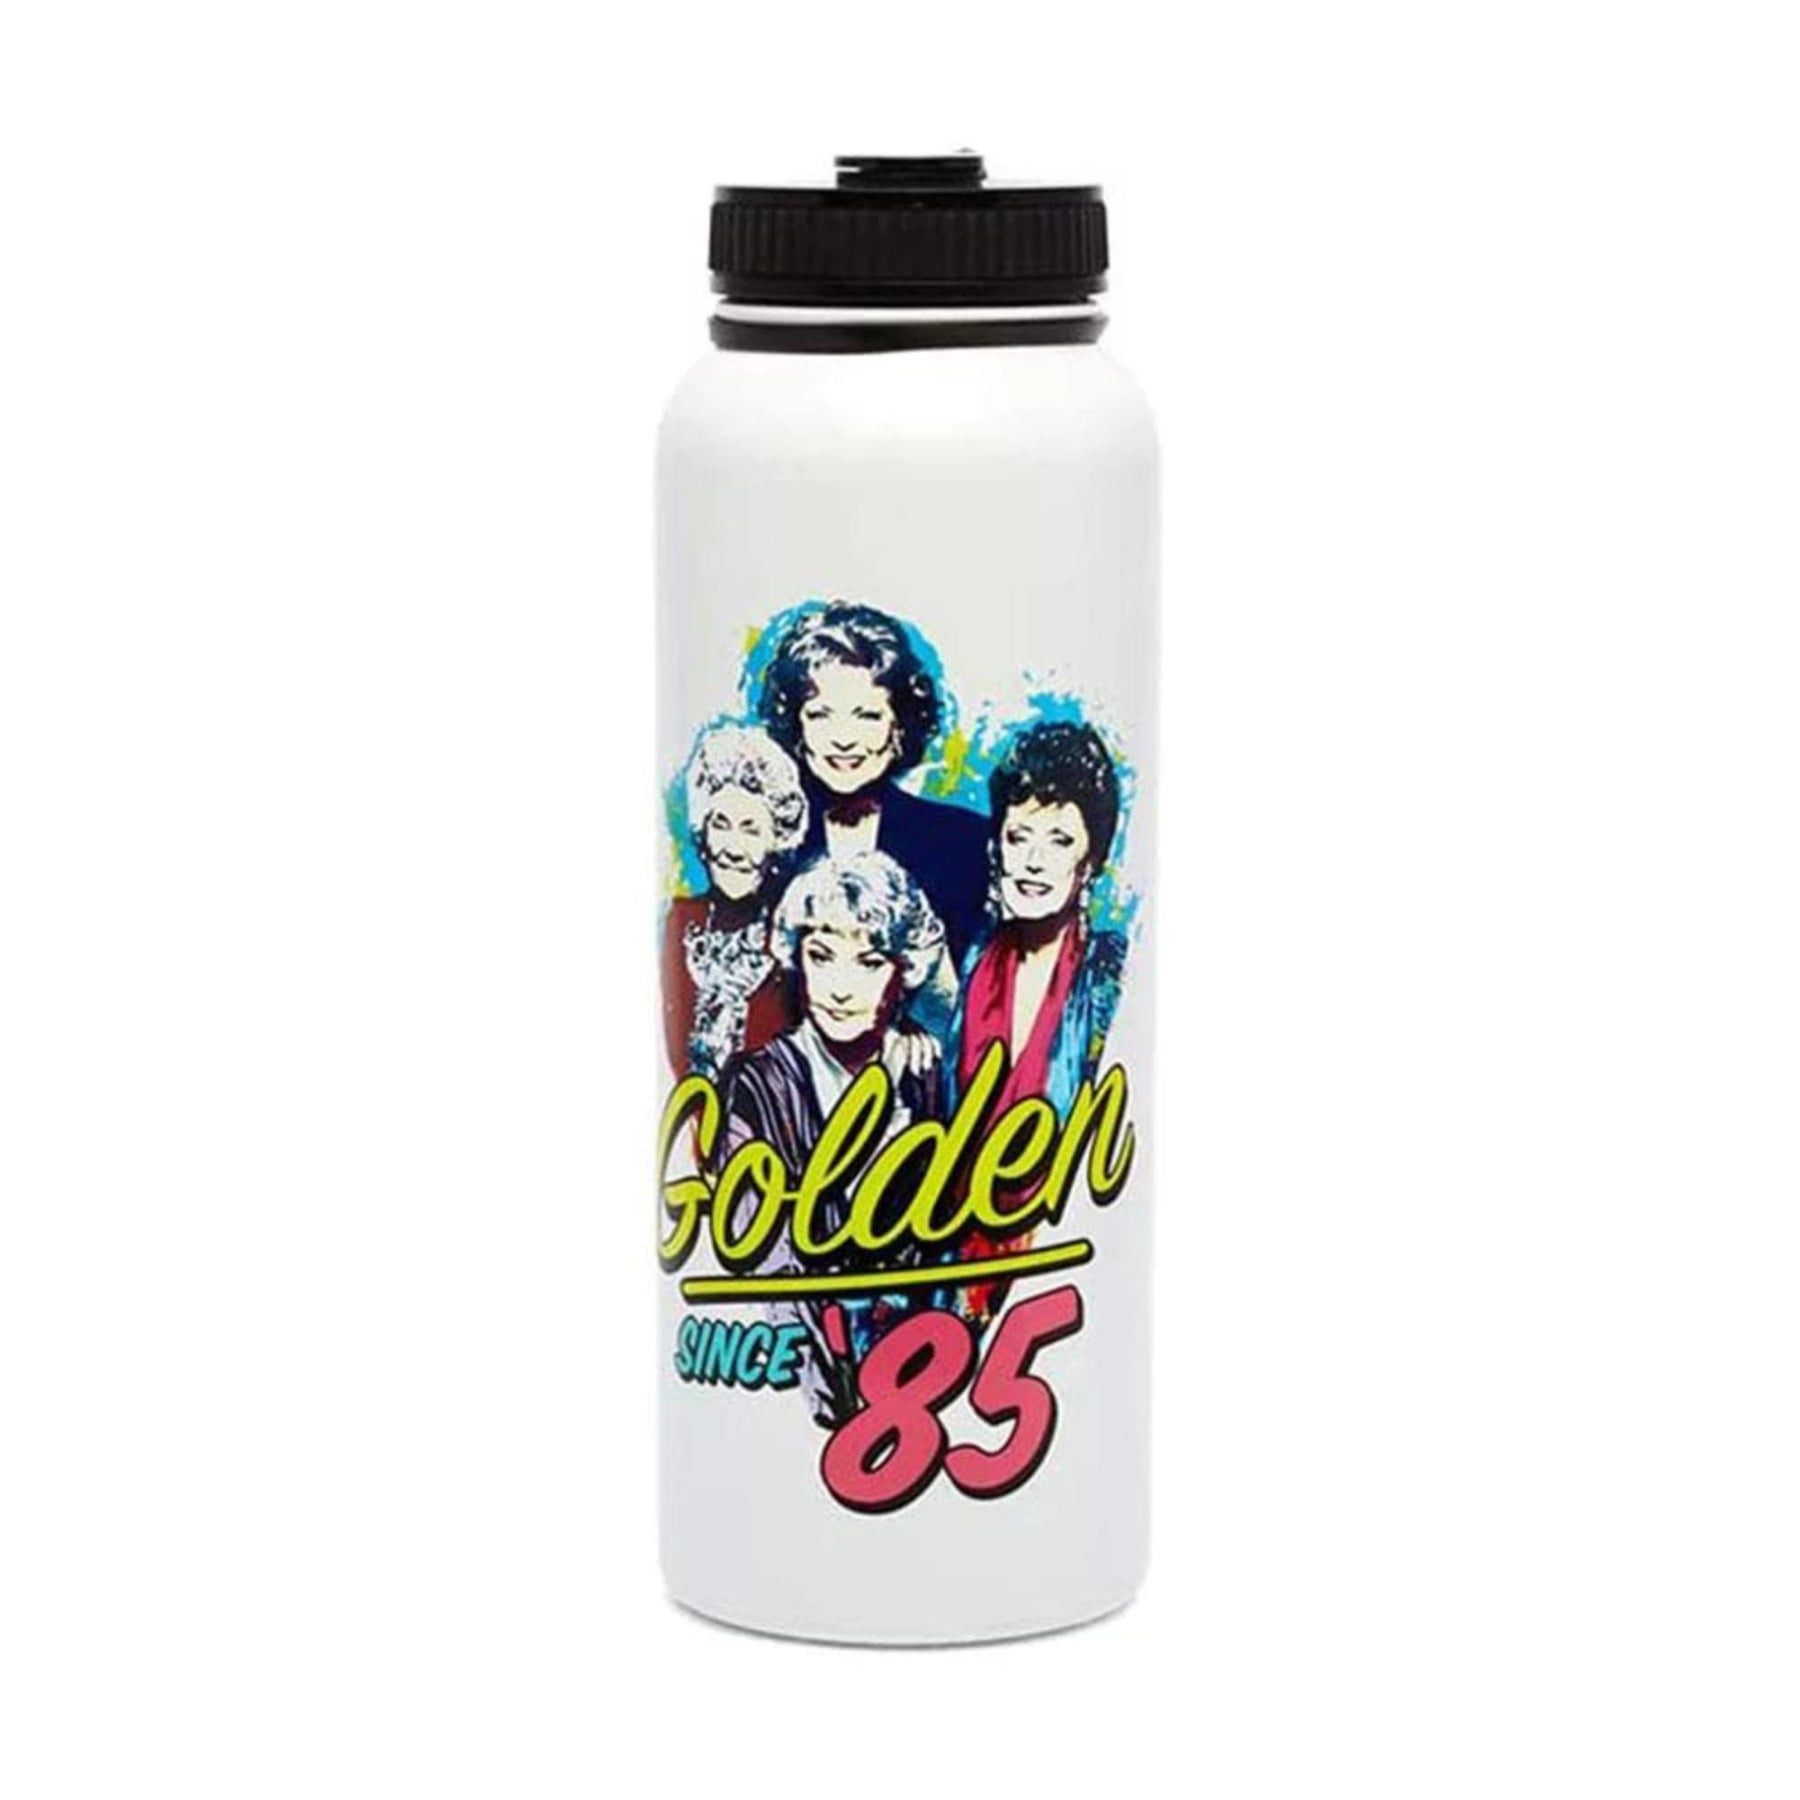 The Golden Girls Golden Since 85 32oz Stainless Steel Water Bottle